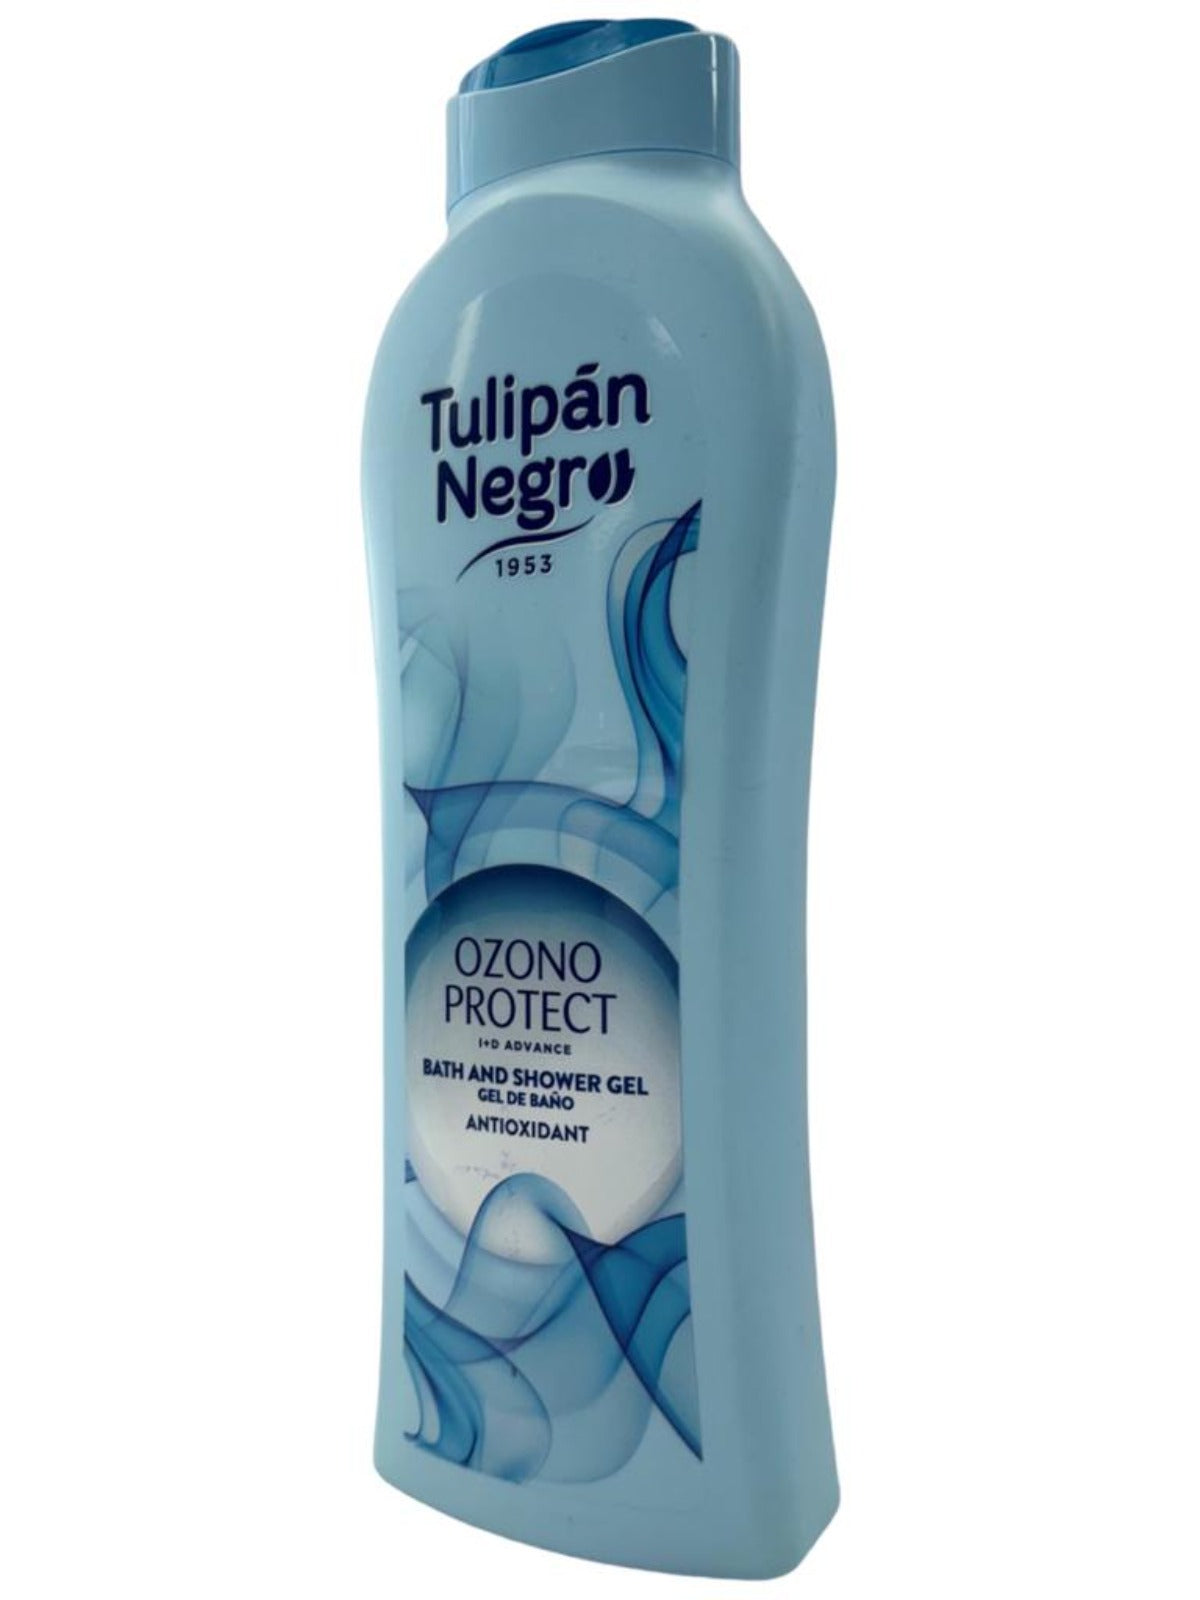 Tulipan Negro Ozono Protect Spanish Bath and Shower Gel 650ml